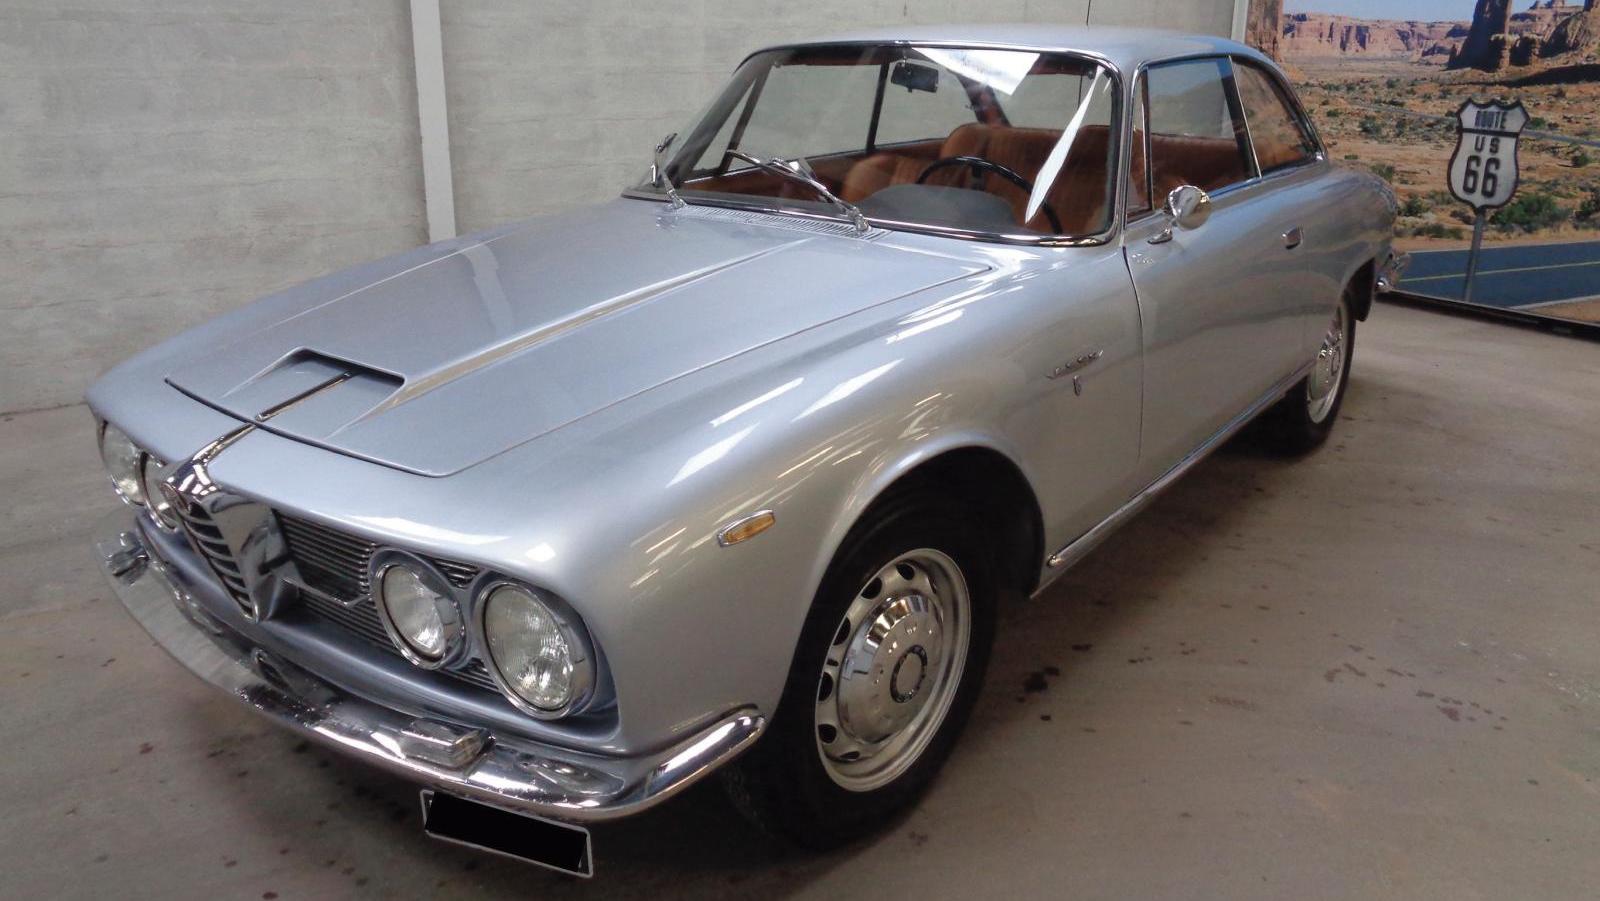 Alfa Romeo 2600 Sprint coupé, 1963. Estimation : 45 000/55 000 € Le sprint d’Alfa Romeo, 6 cylindres de légende...